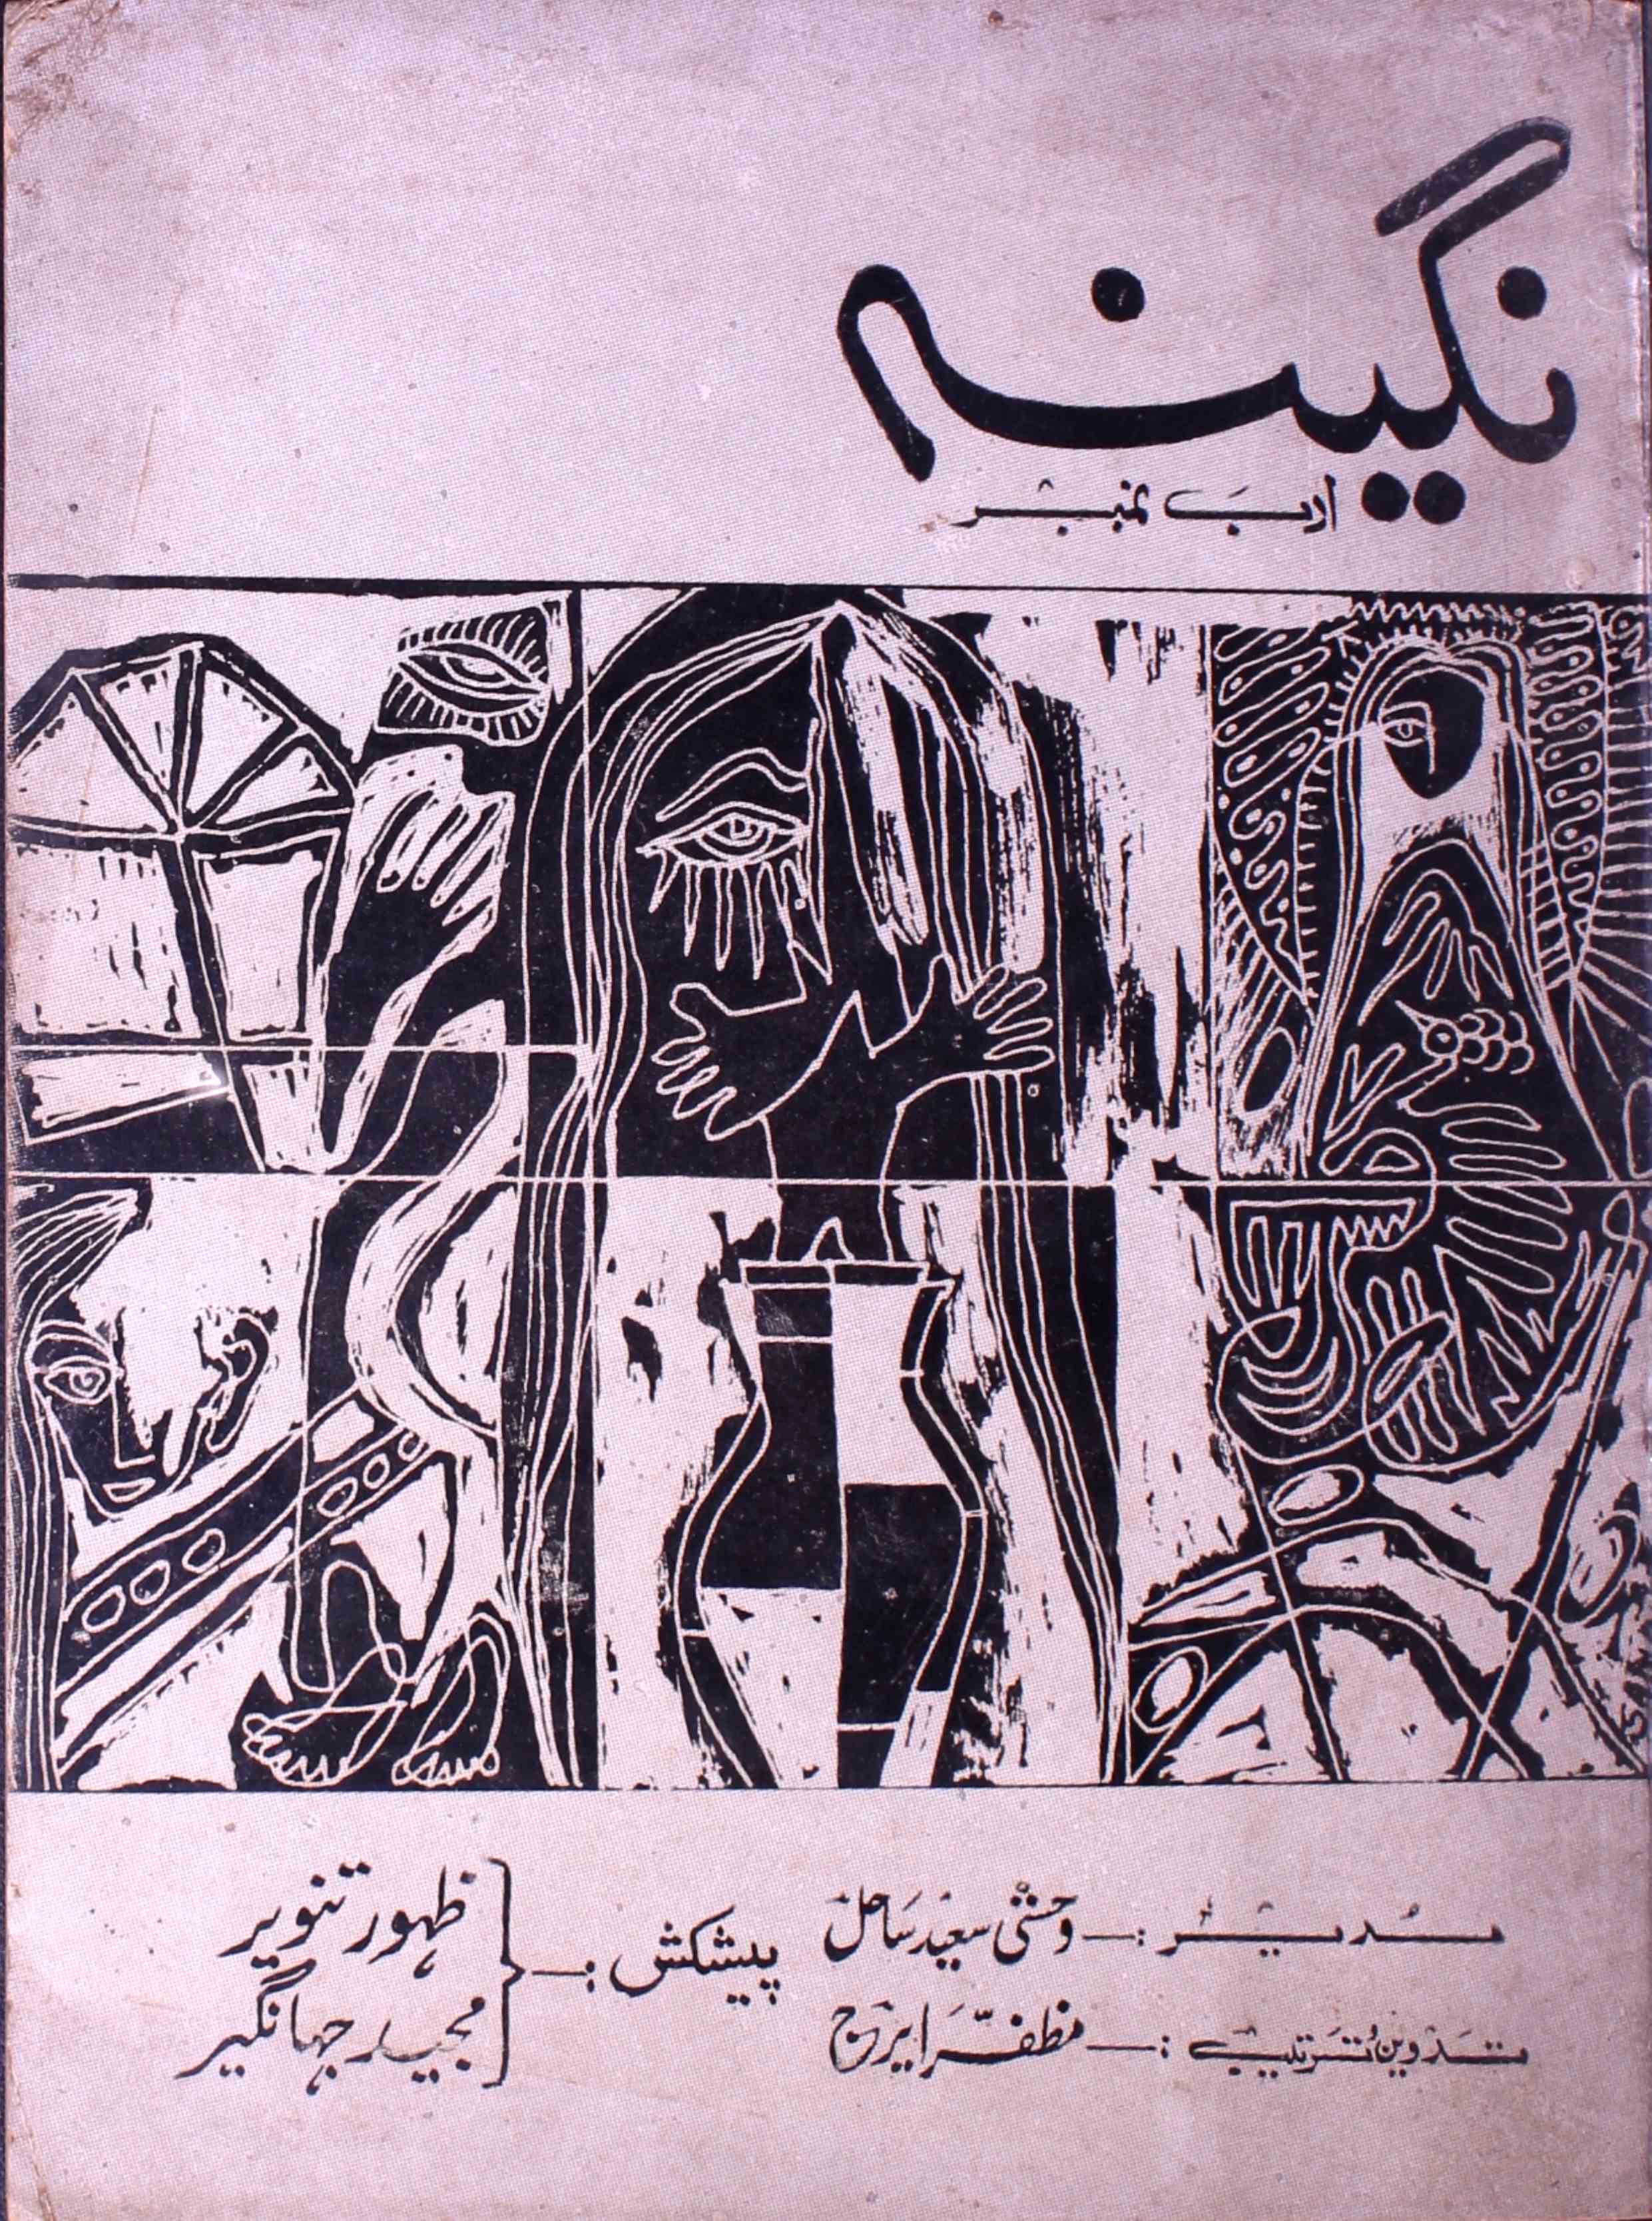 Nagina Jild 5 Shumara 1,2,3 Oct,Nov,Dec 1975